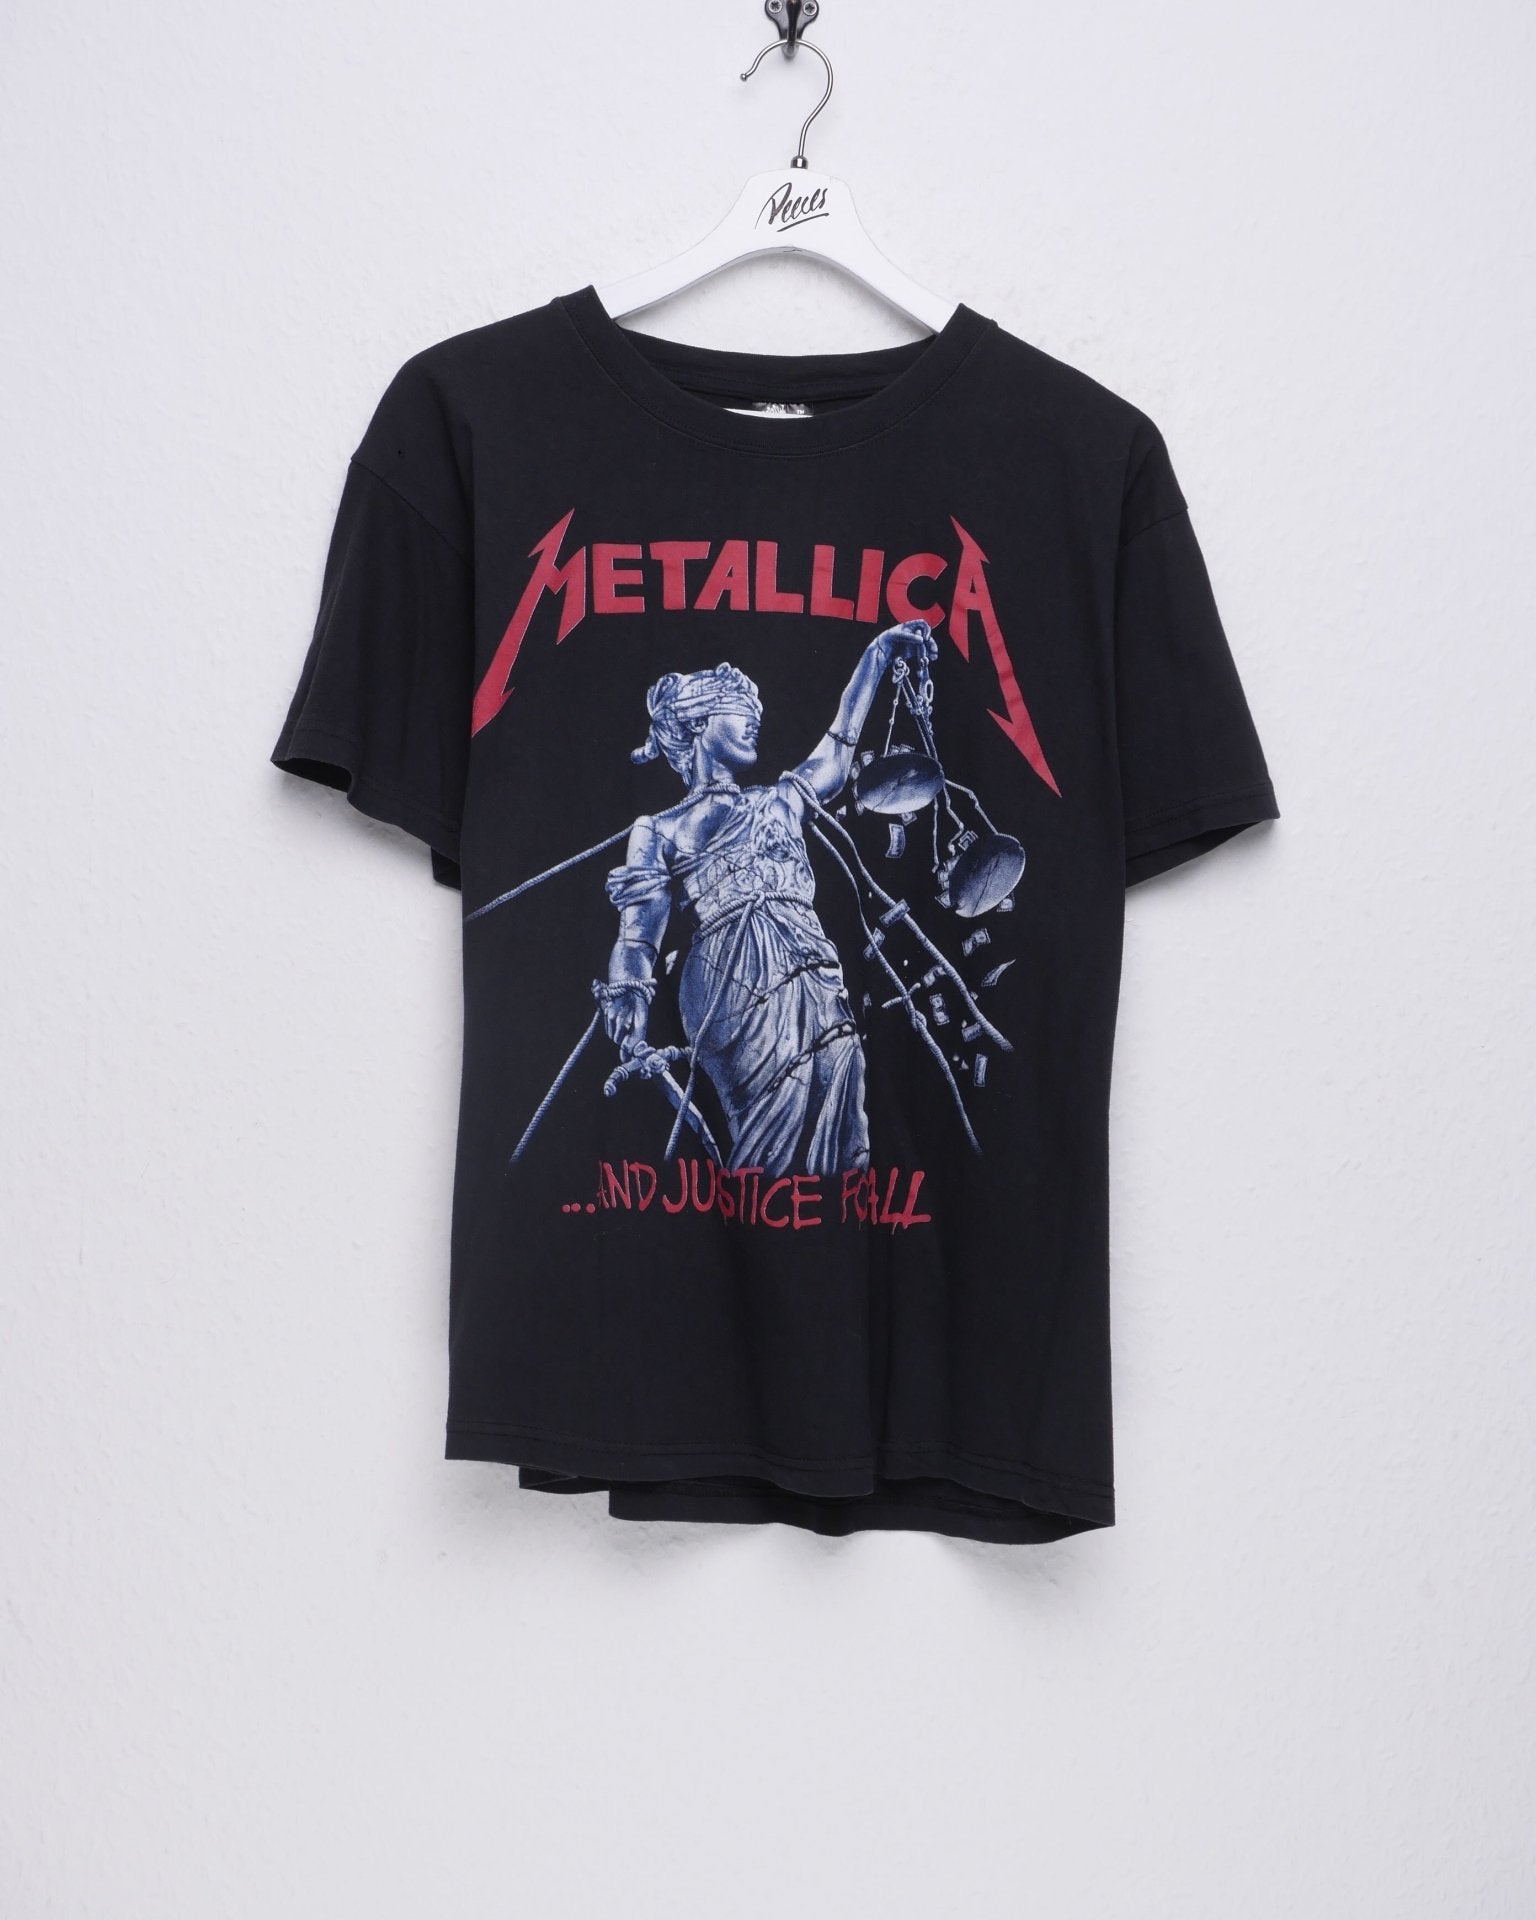 Metallica printed Graphic Vintage Shirt - Peeces